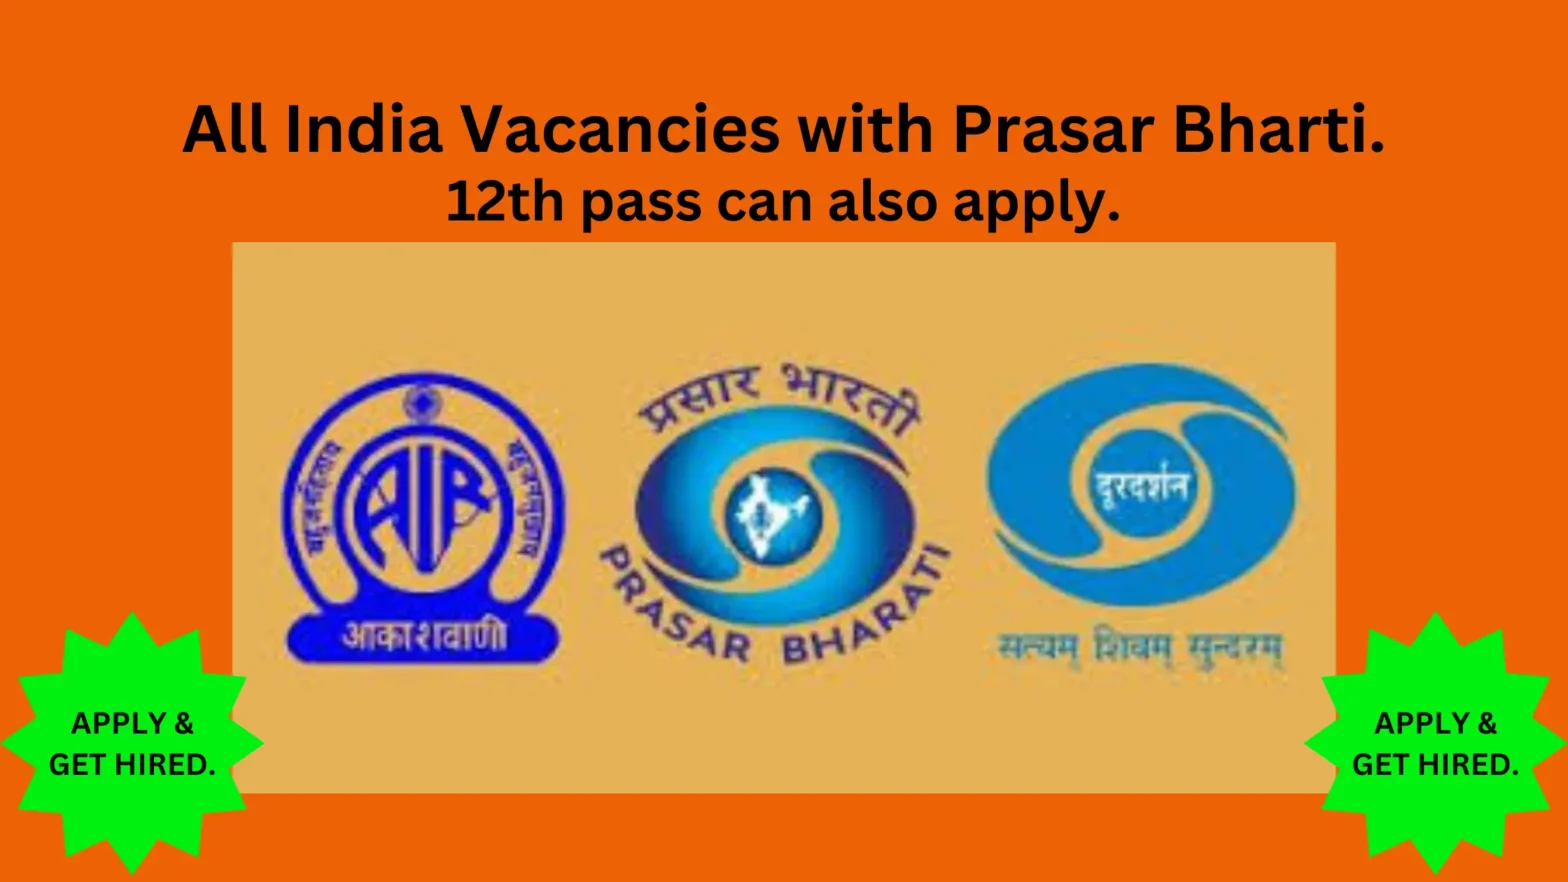 All India Vacancies with Prasar Bharti.